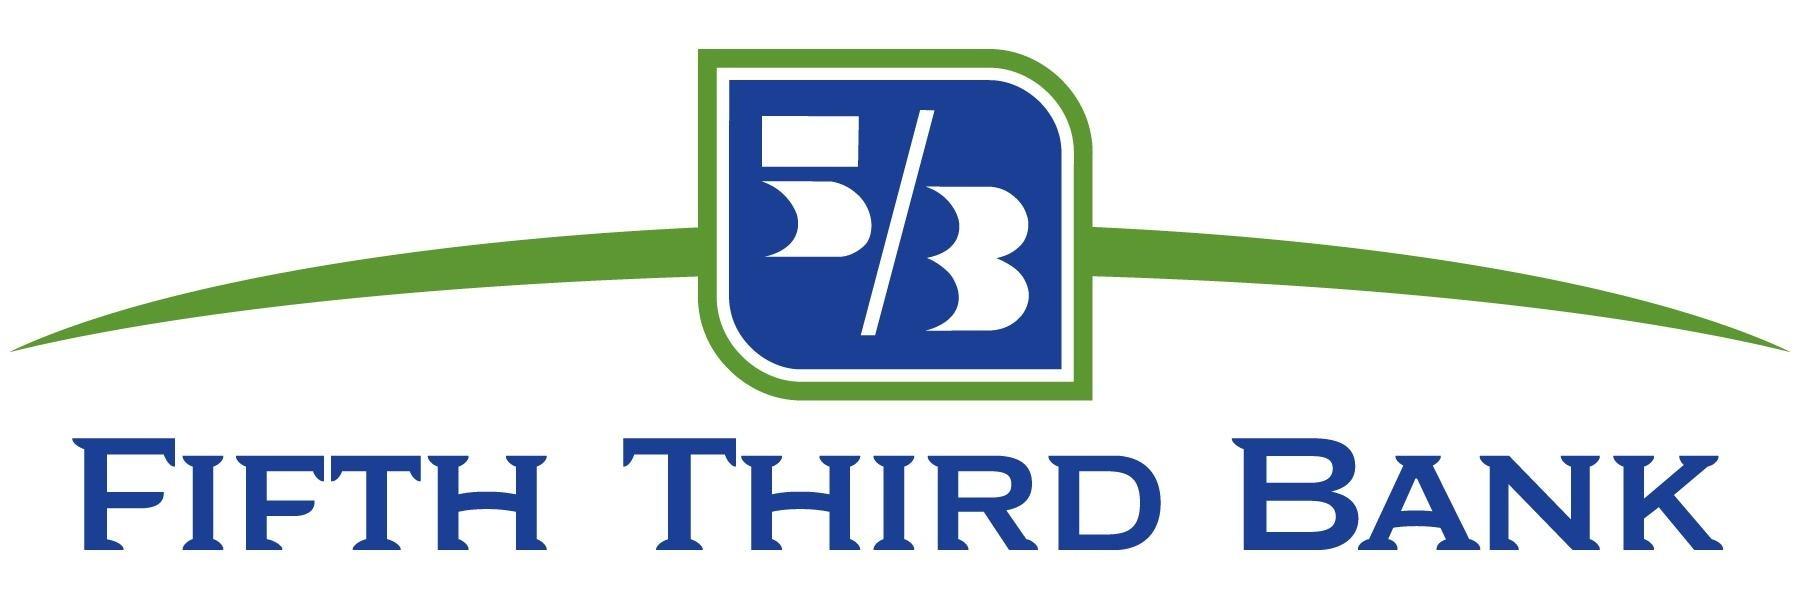 Fifth Third Bank sponsor logo